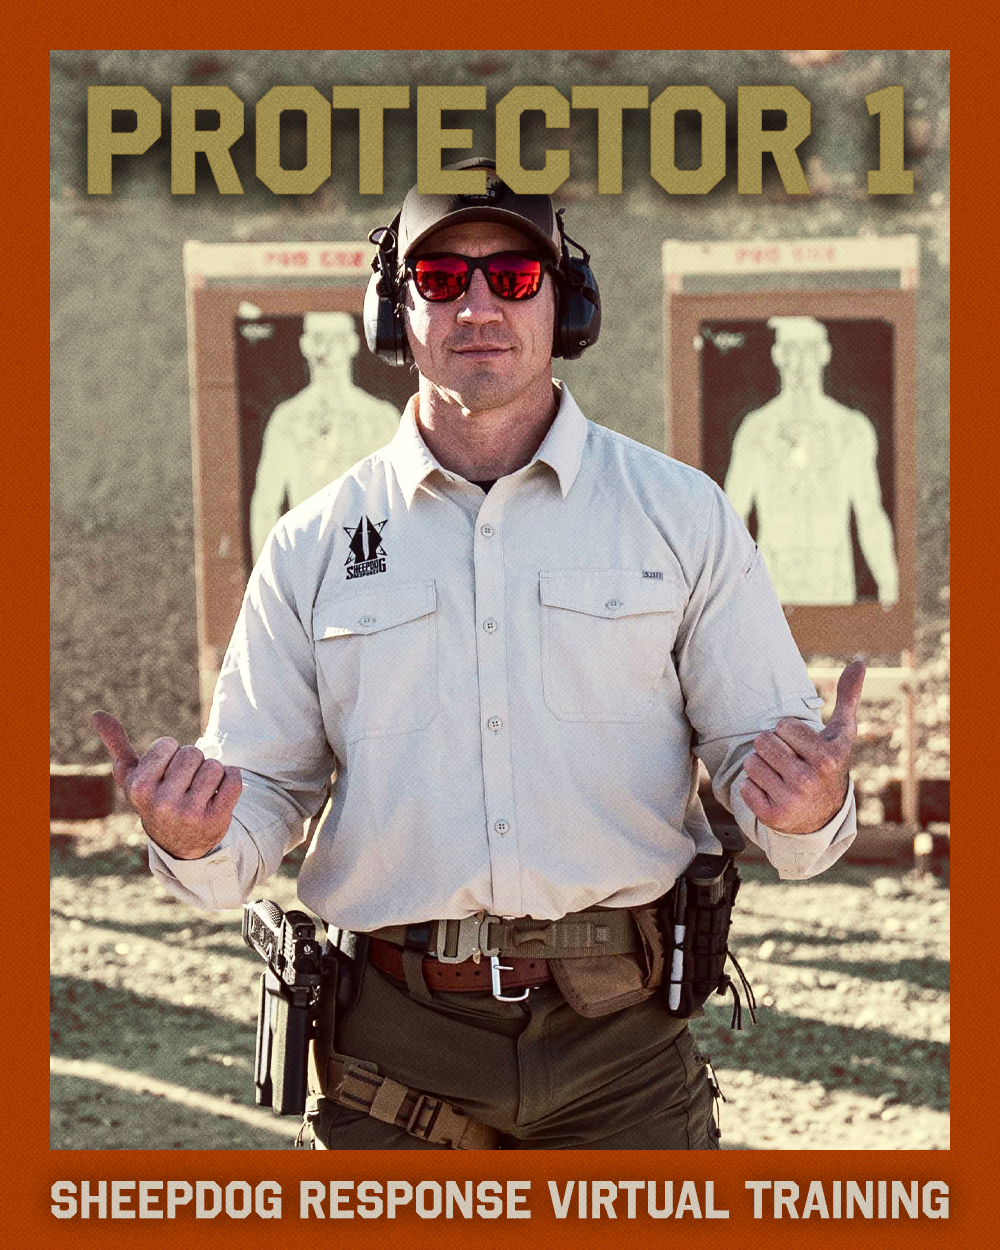 Protector 1 Online Virtual Training